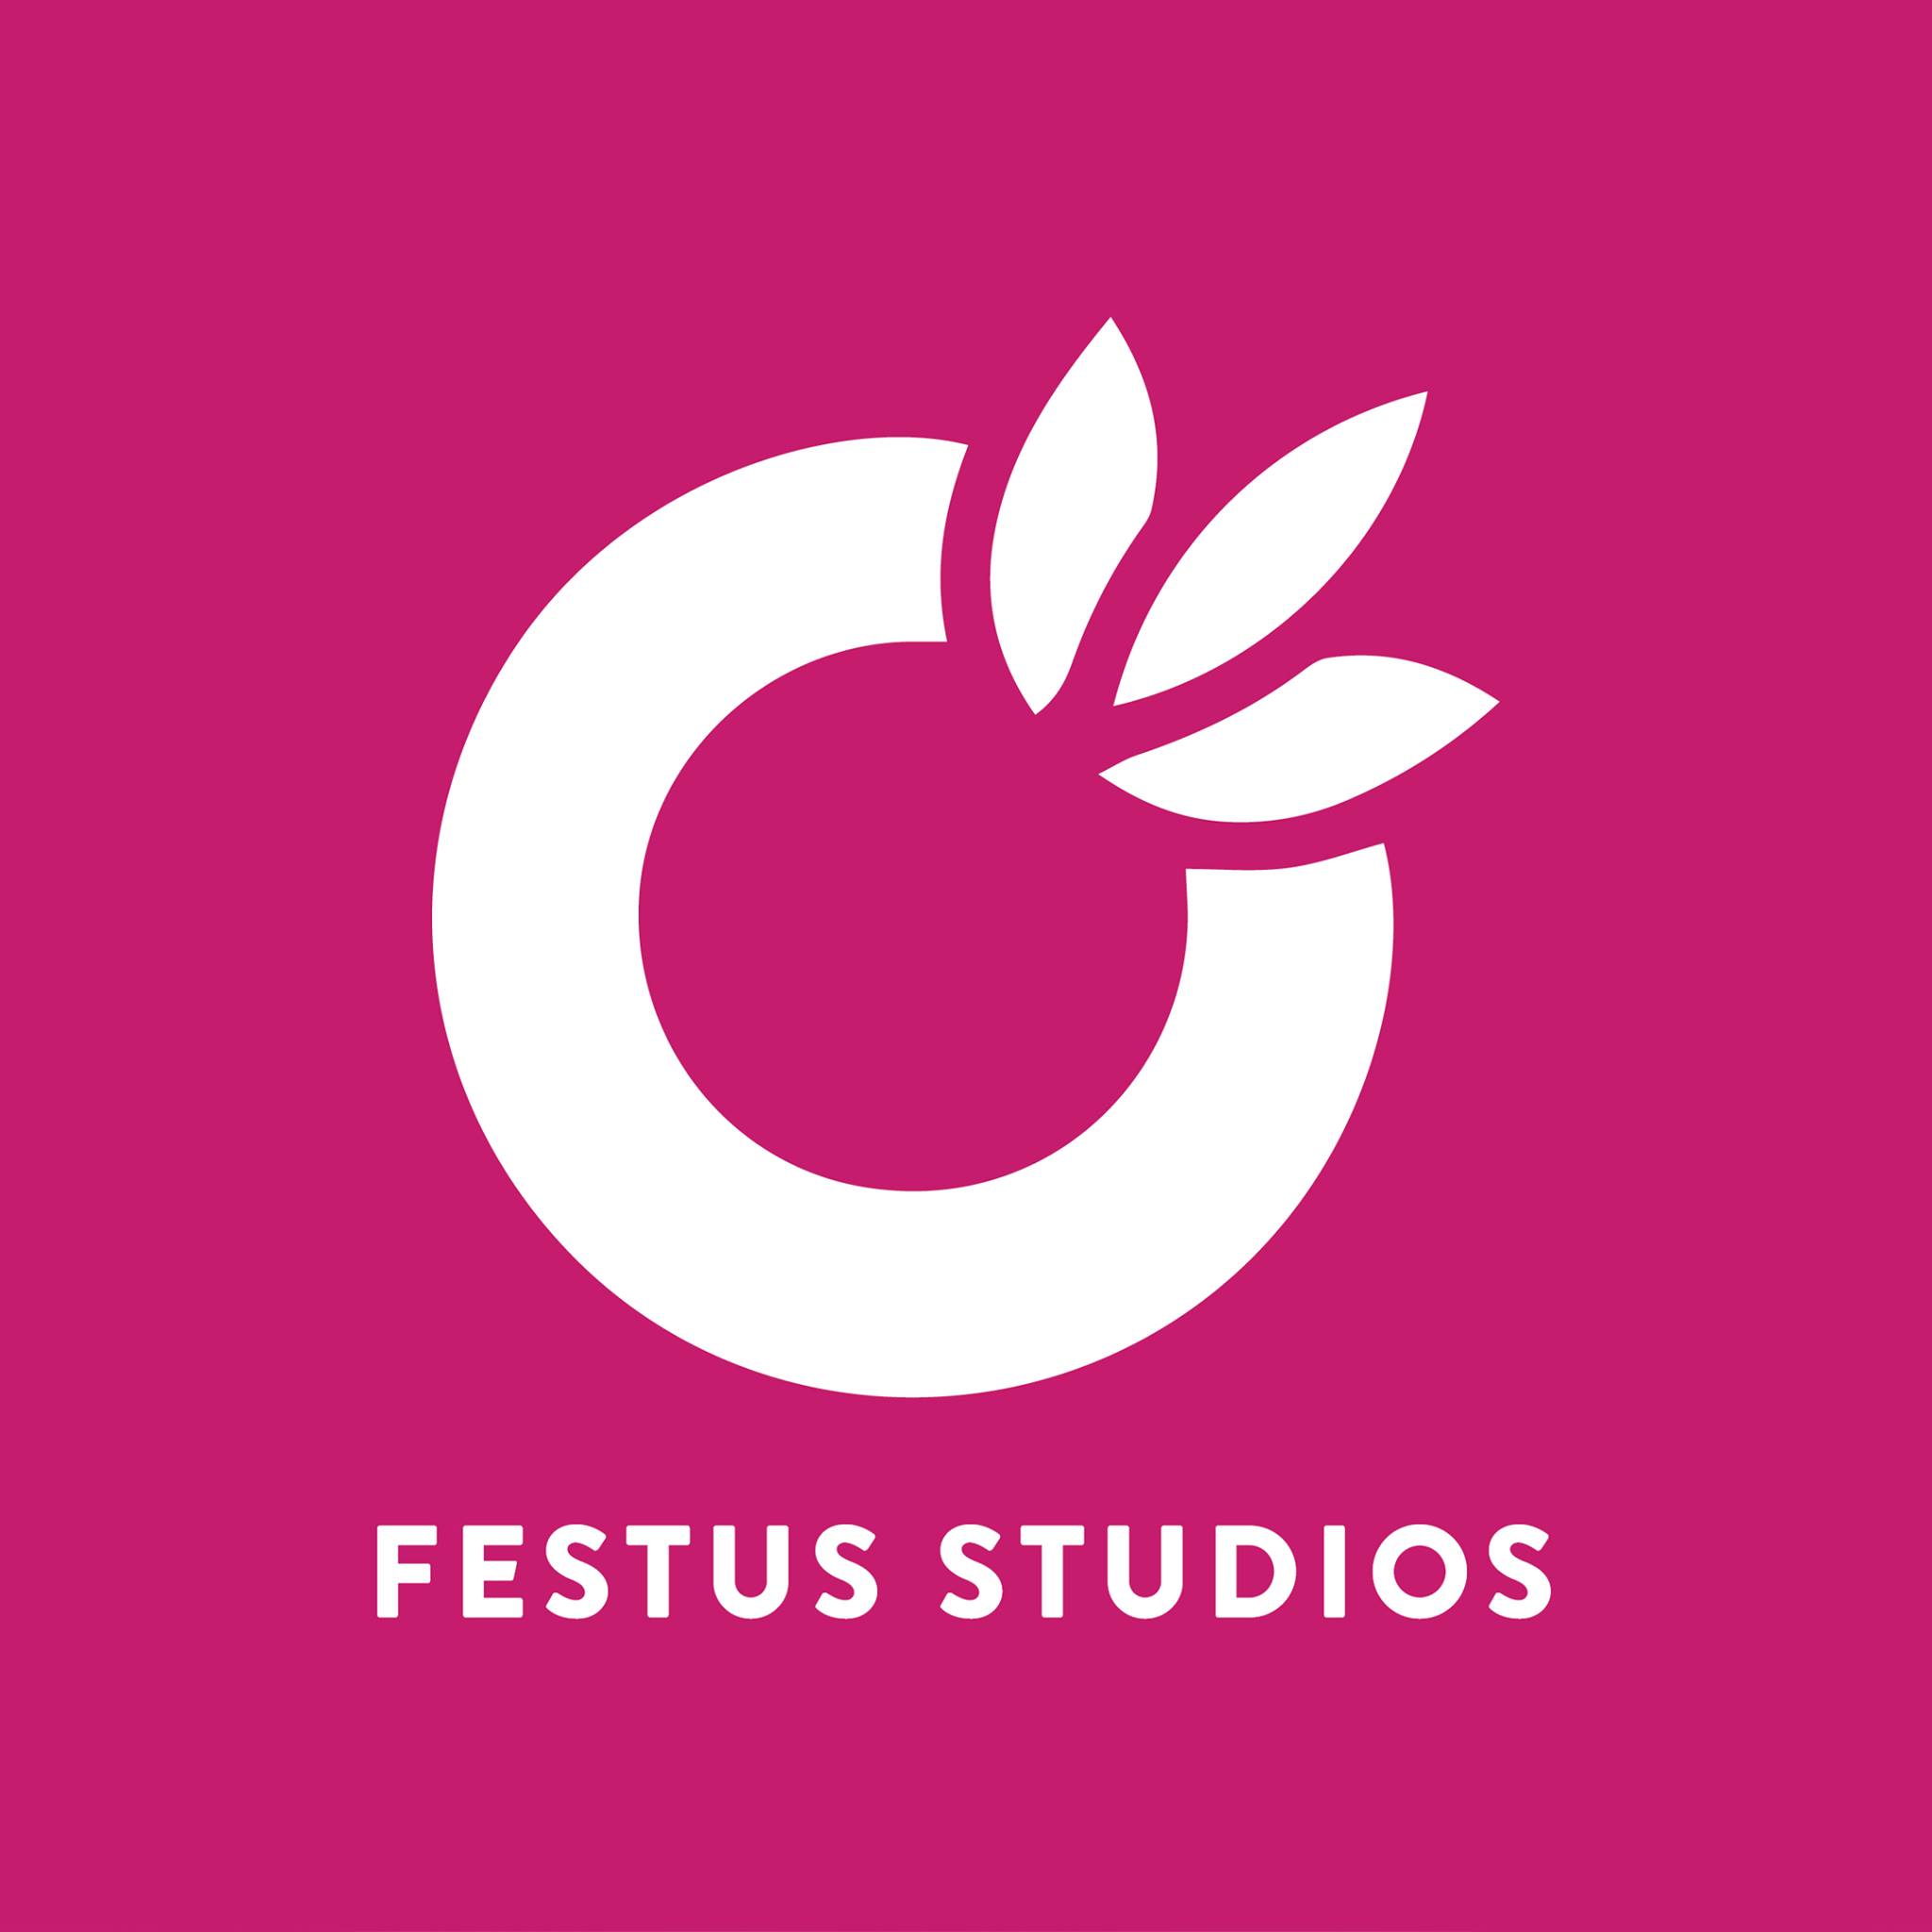 Festus Studios|Photographer|Event Services